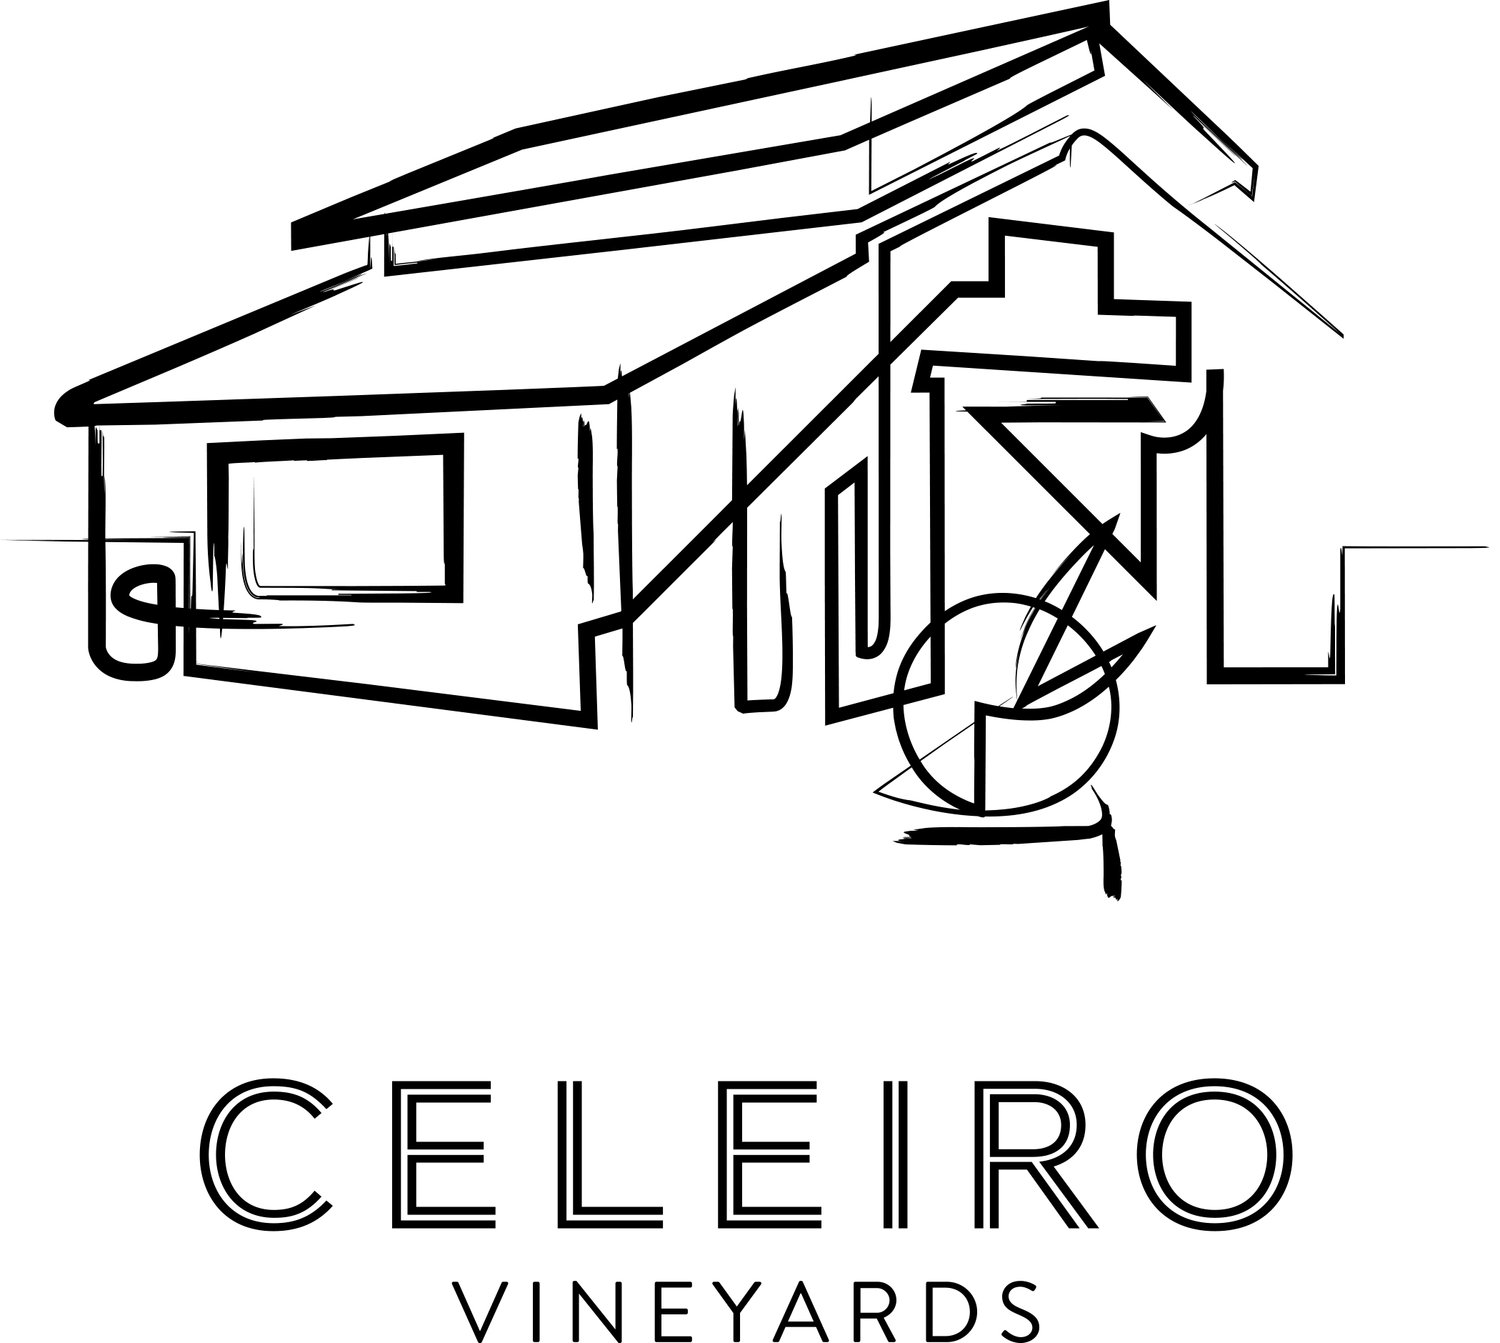 Celeiro vineyards